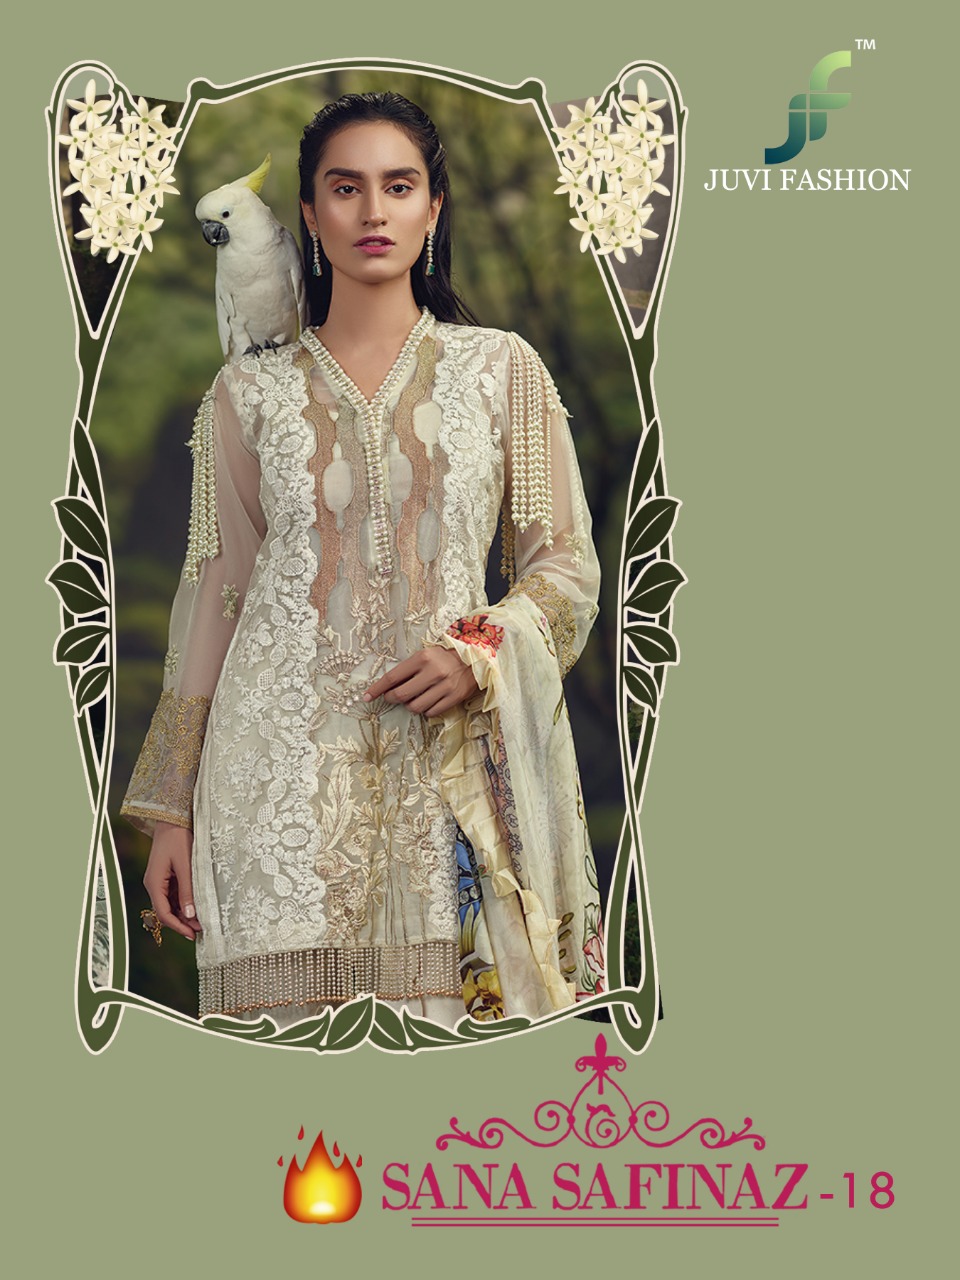 JUVI fashion presenting sana safinaz 18 beautiful Special festive collection of salwar kameez